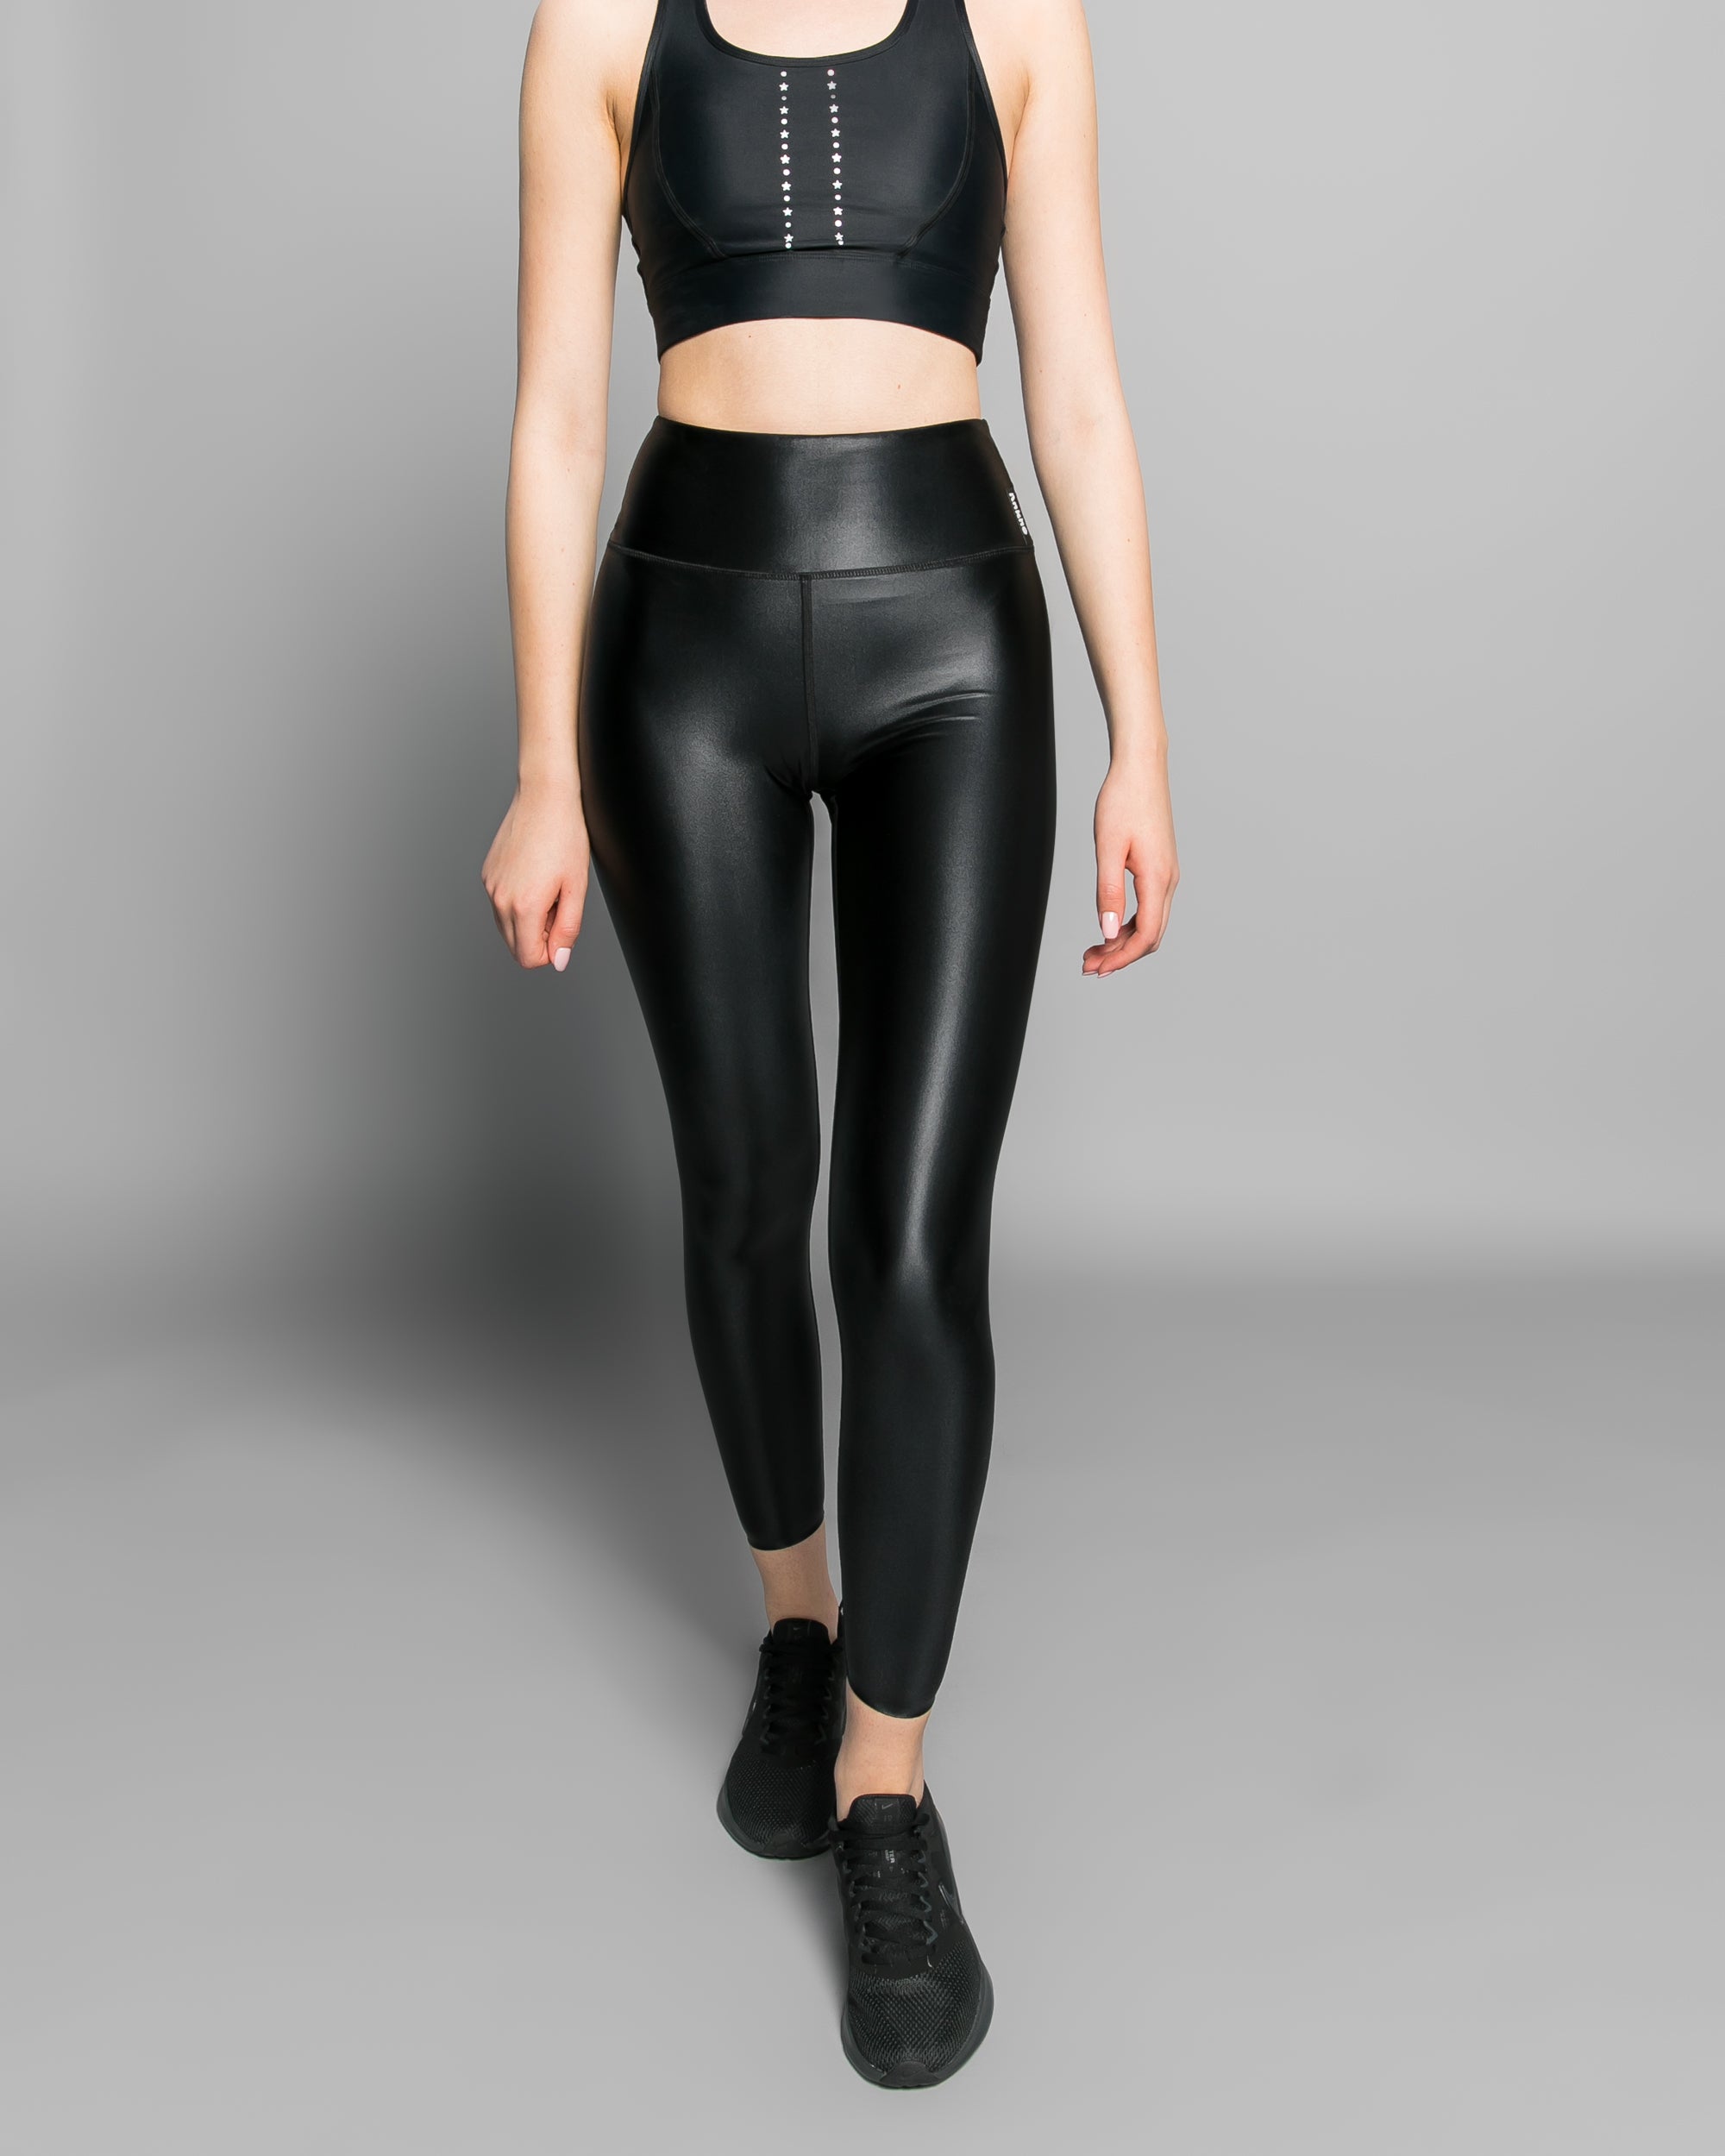 BestYFit - 🐾 Monday style. Black shiny leggings.